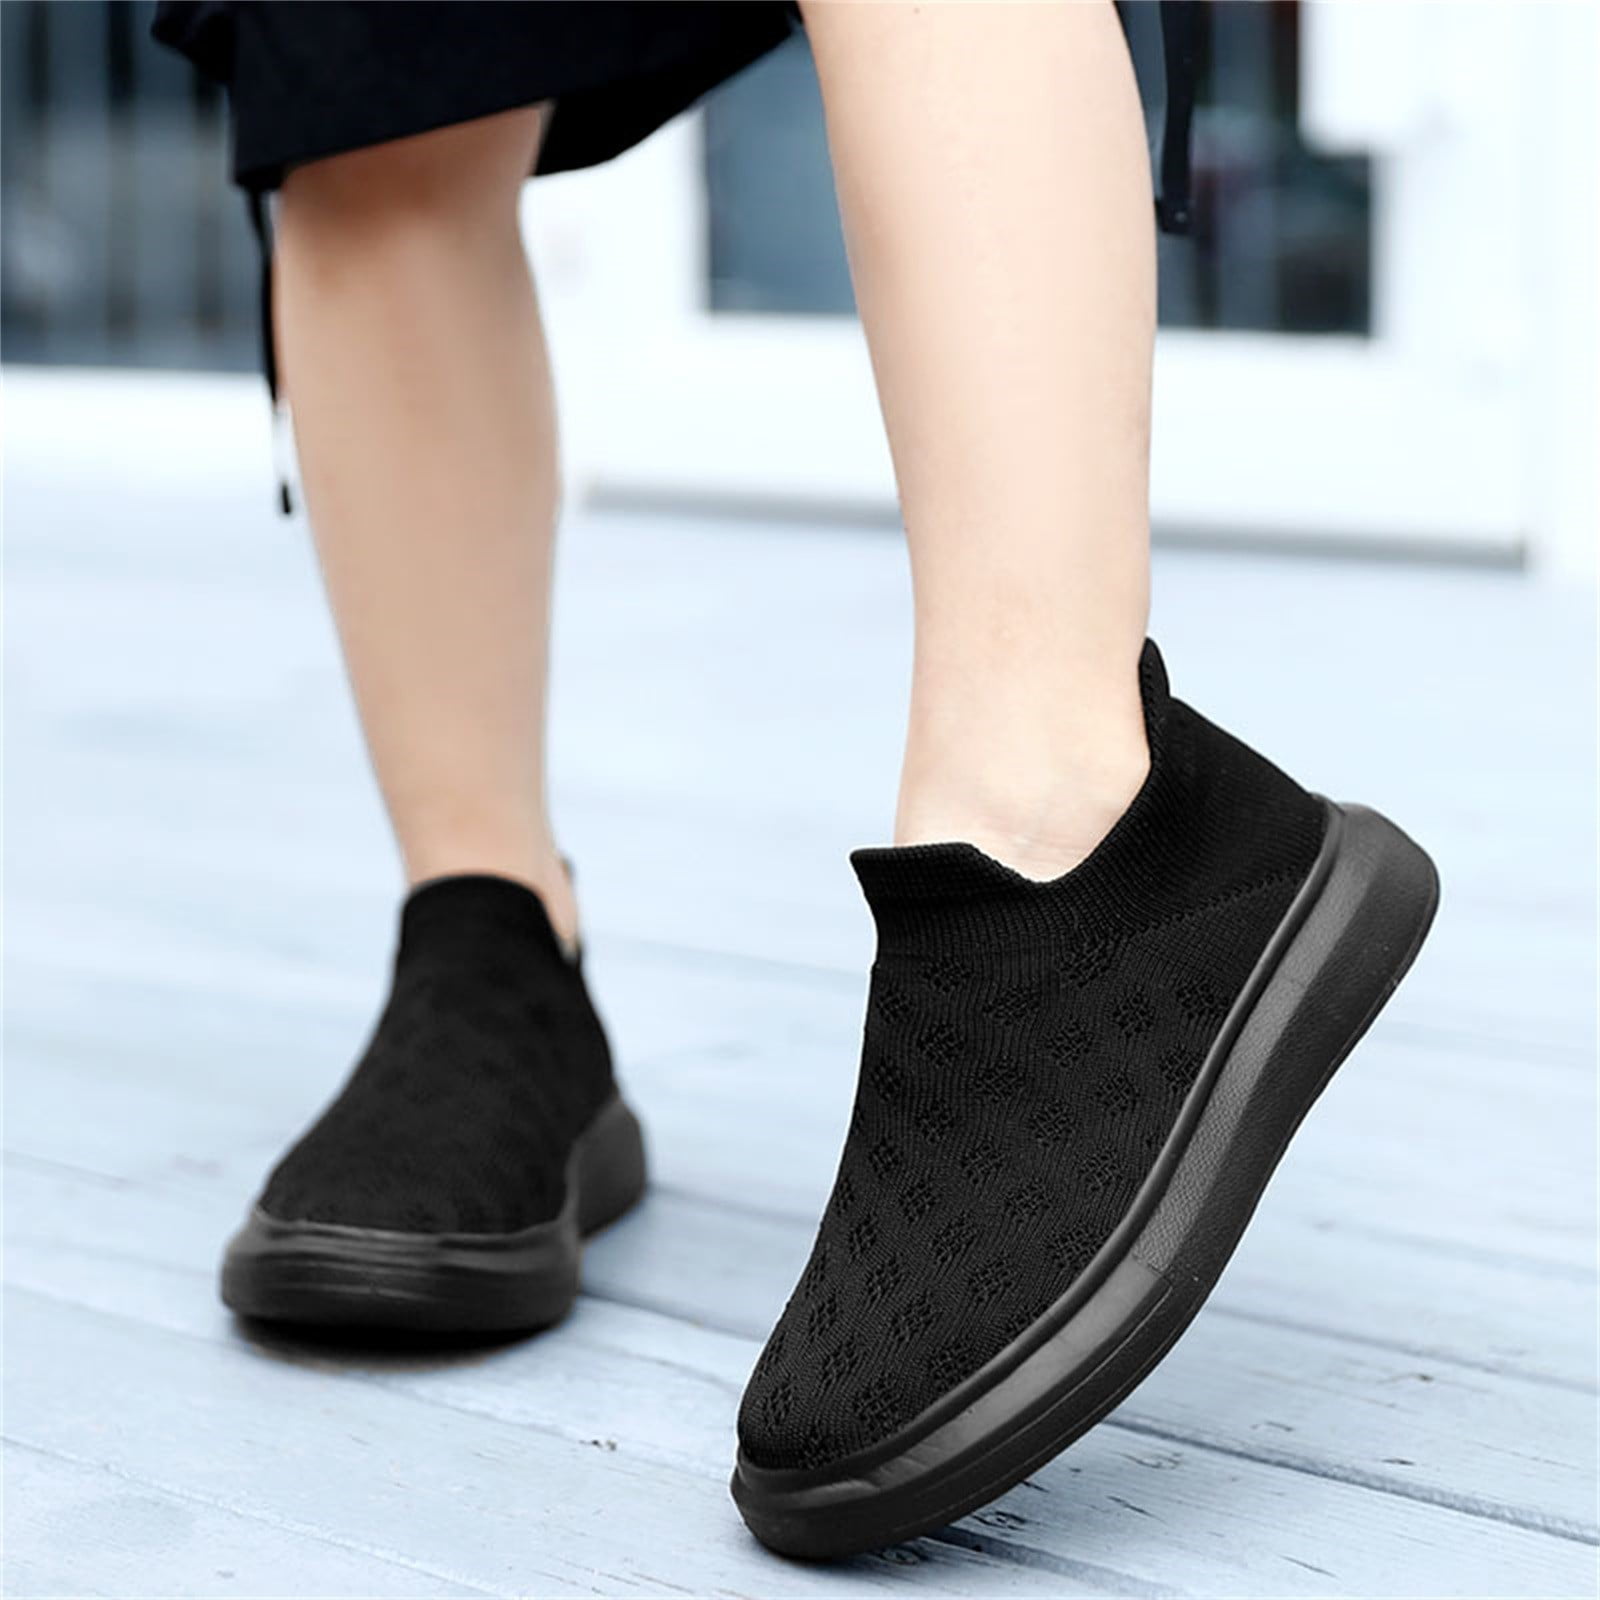 Skechers Bobs B Extra Cute 2 Cute 4 U Ladies All Black Shoes Pumps Size 4-8  | eBay